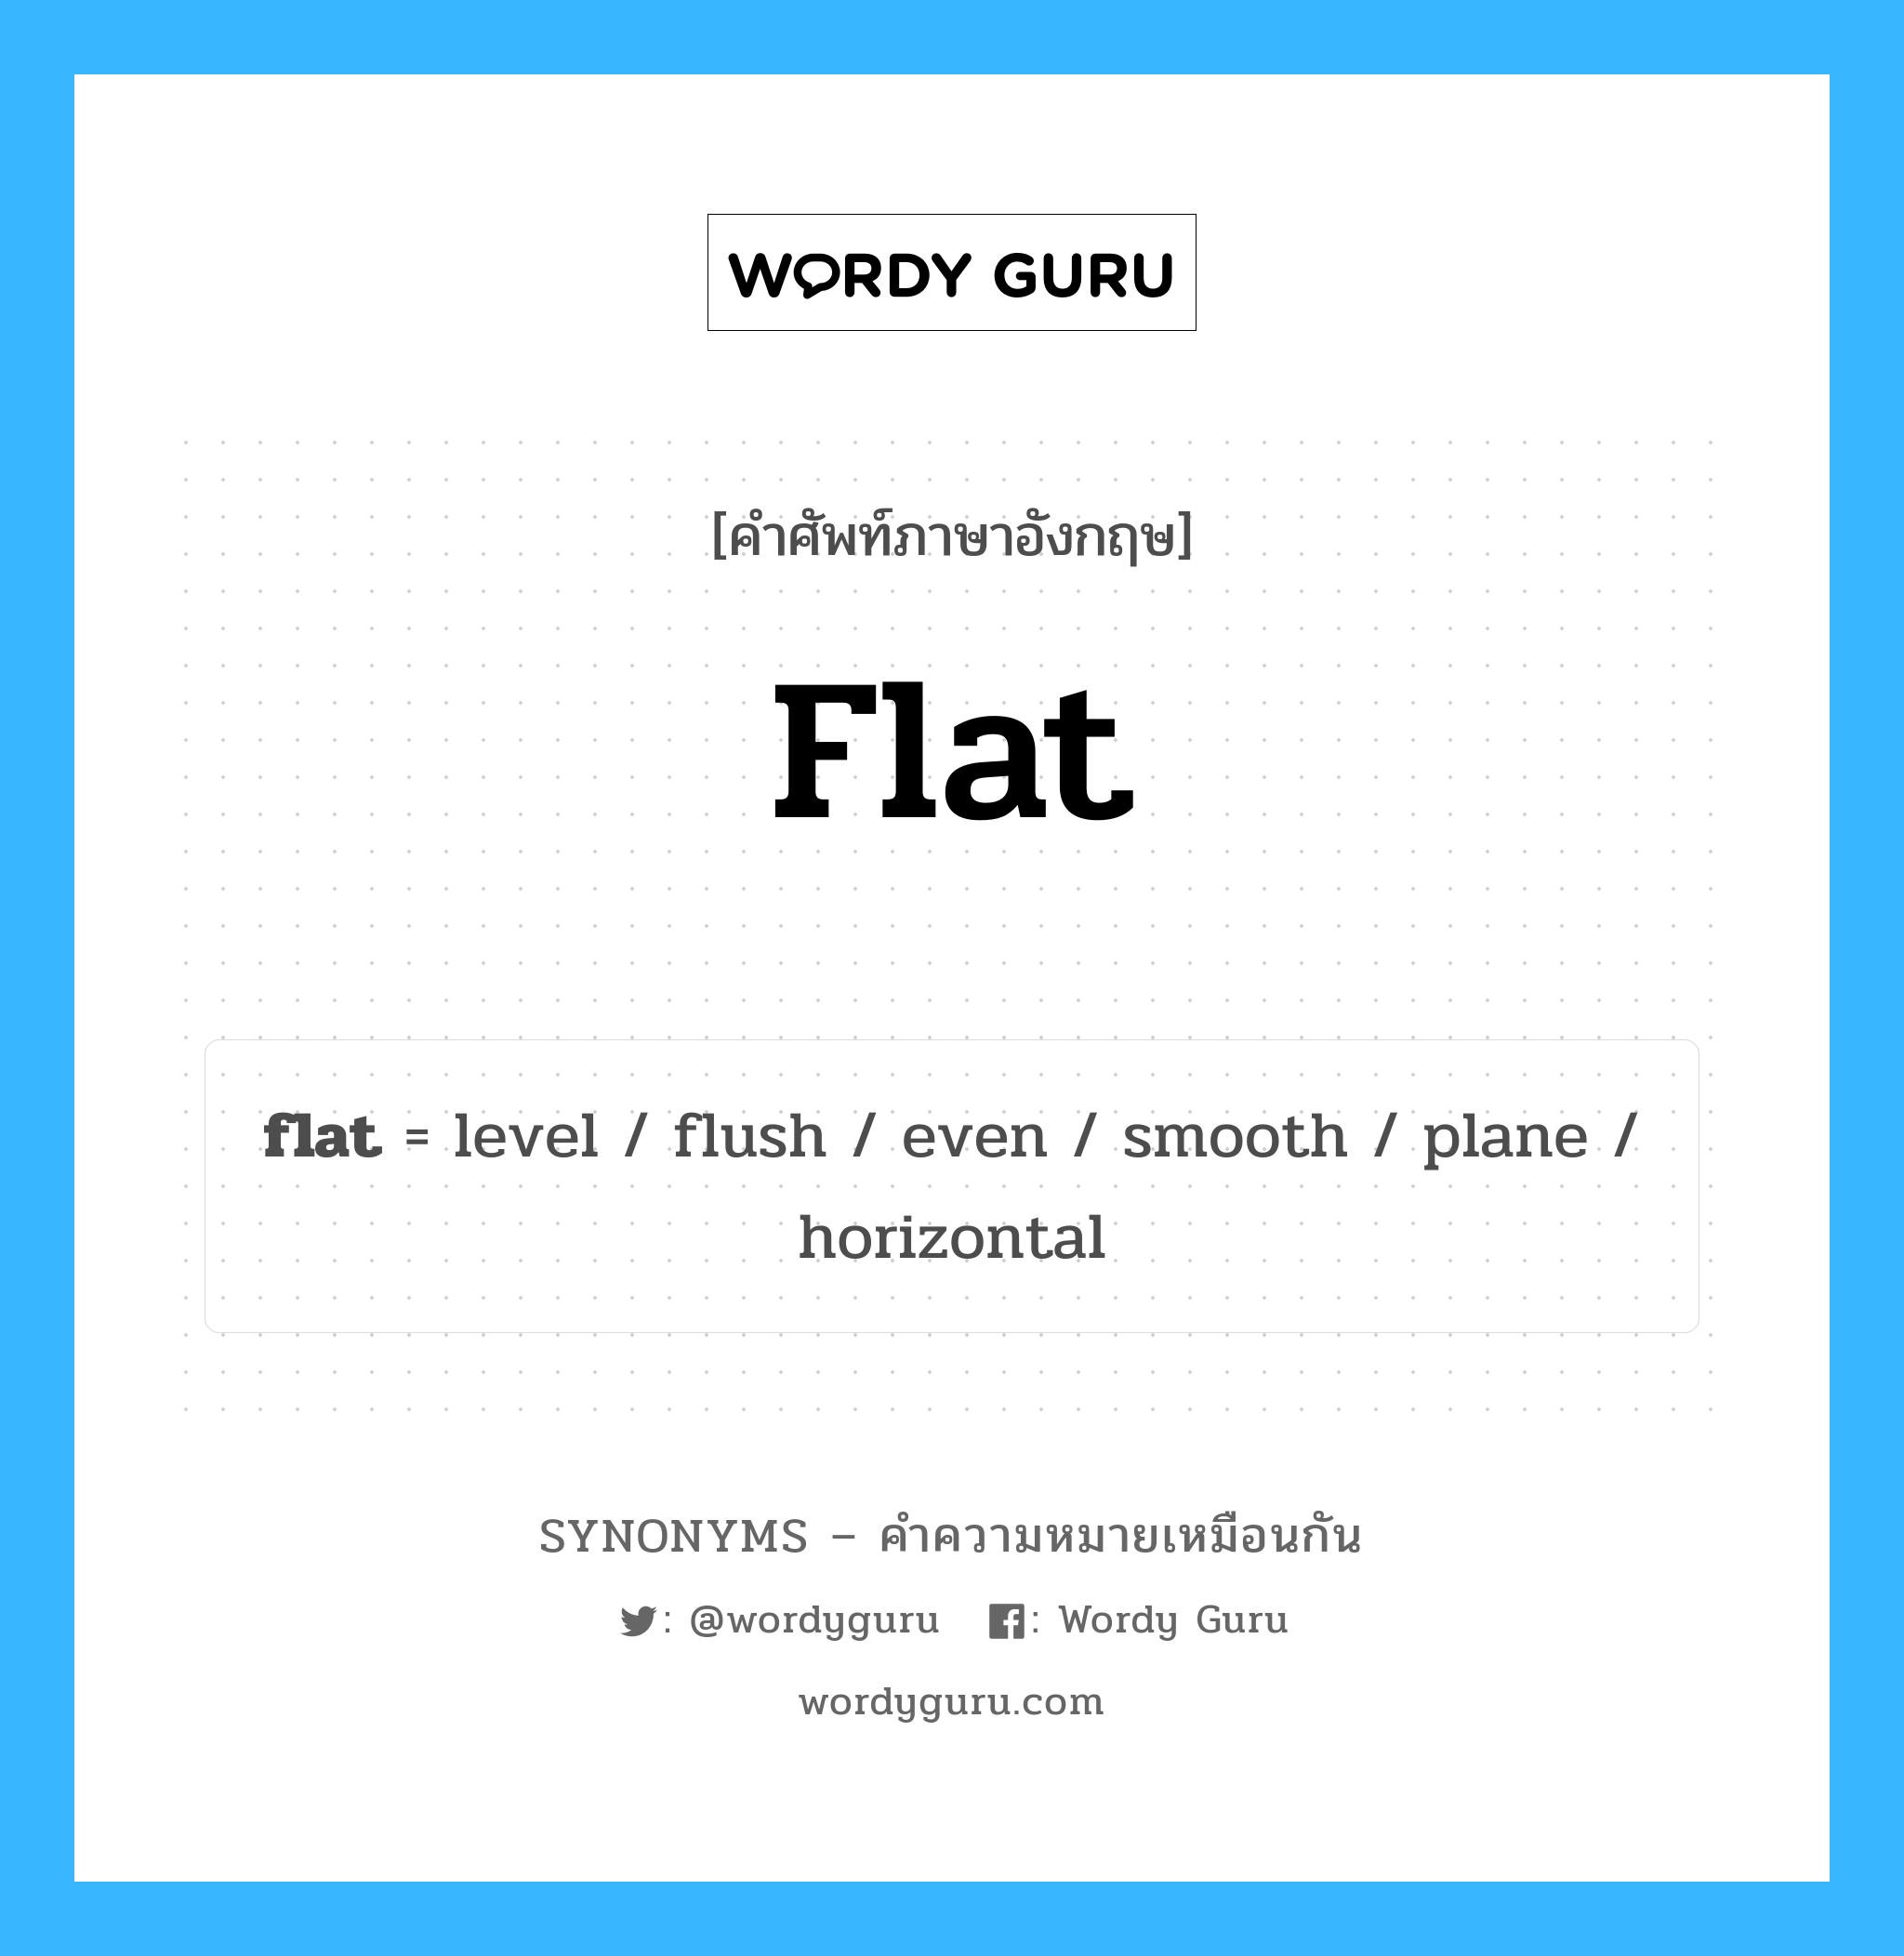 smooth เป็นหนึ่งใน flat และมีคำอื่น ๆ อีกดังนี้, คำศัพท์ภาษาอังกฤษ smooth ความหมายคล้ายกันกับ flat แปลว่า ราบรื่น หมวด flat